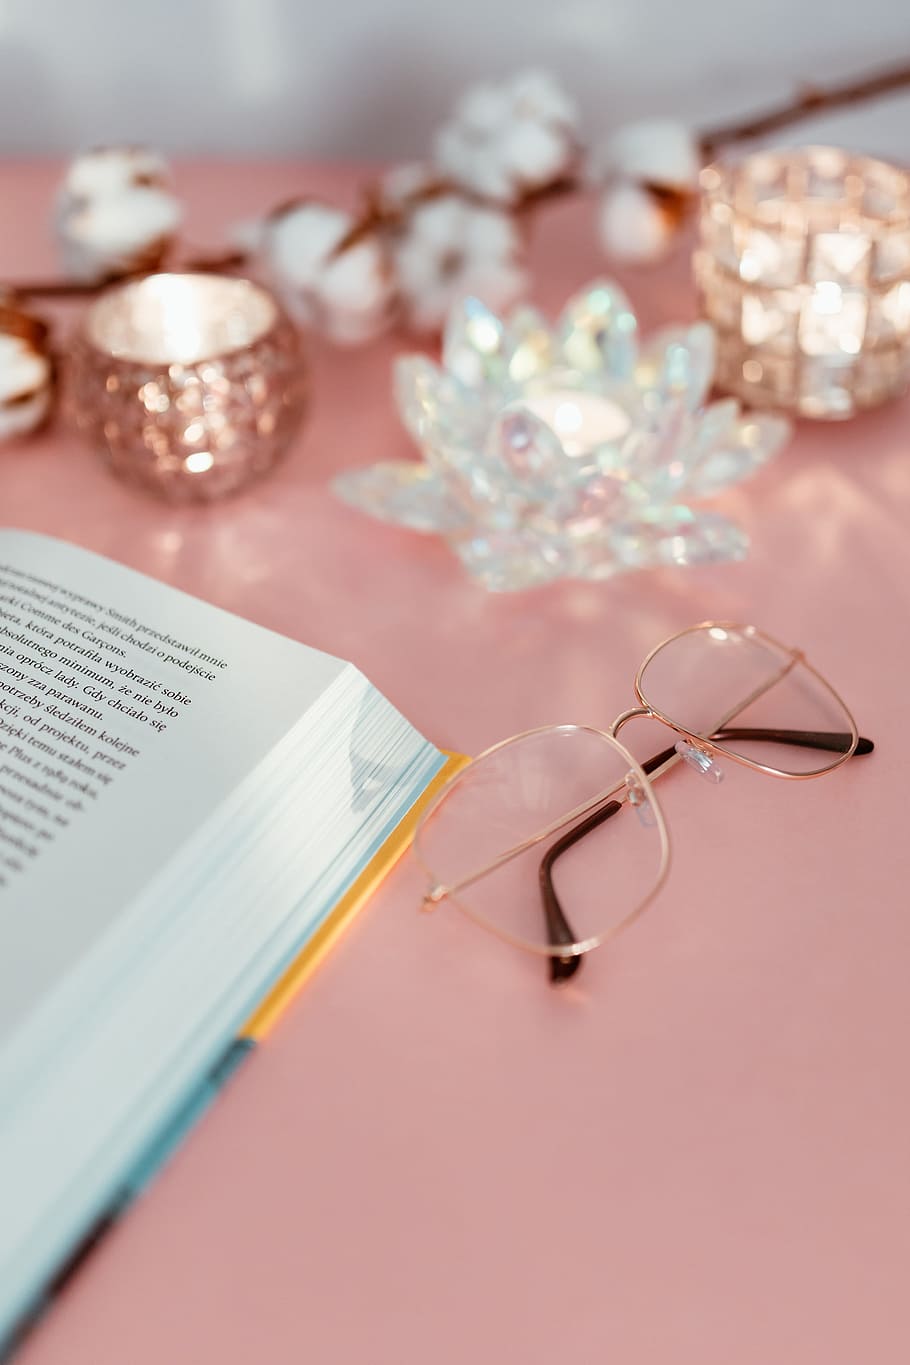 terbuka, buku, pink, latar belakang, membaca, kacamata, belajar, backgound merah muda, feminin, meja